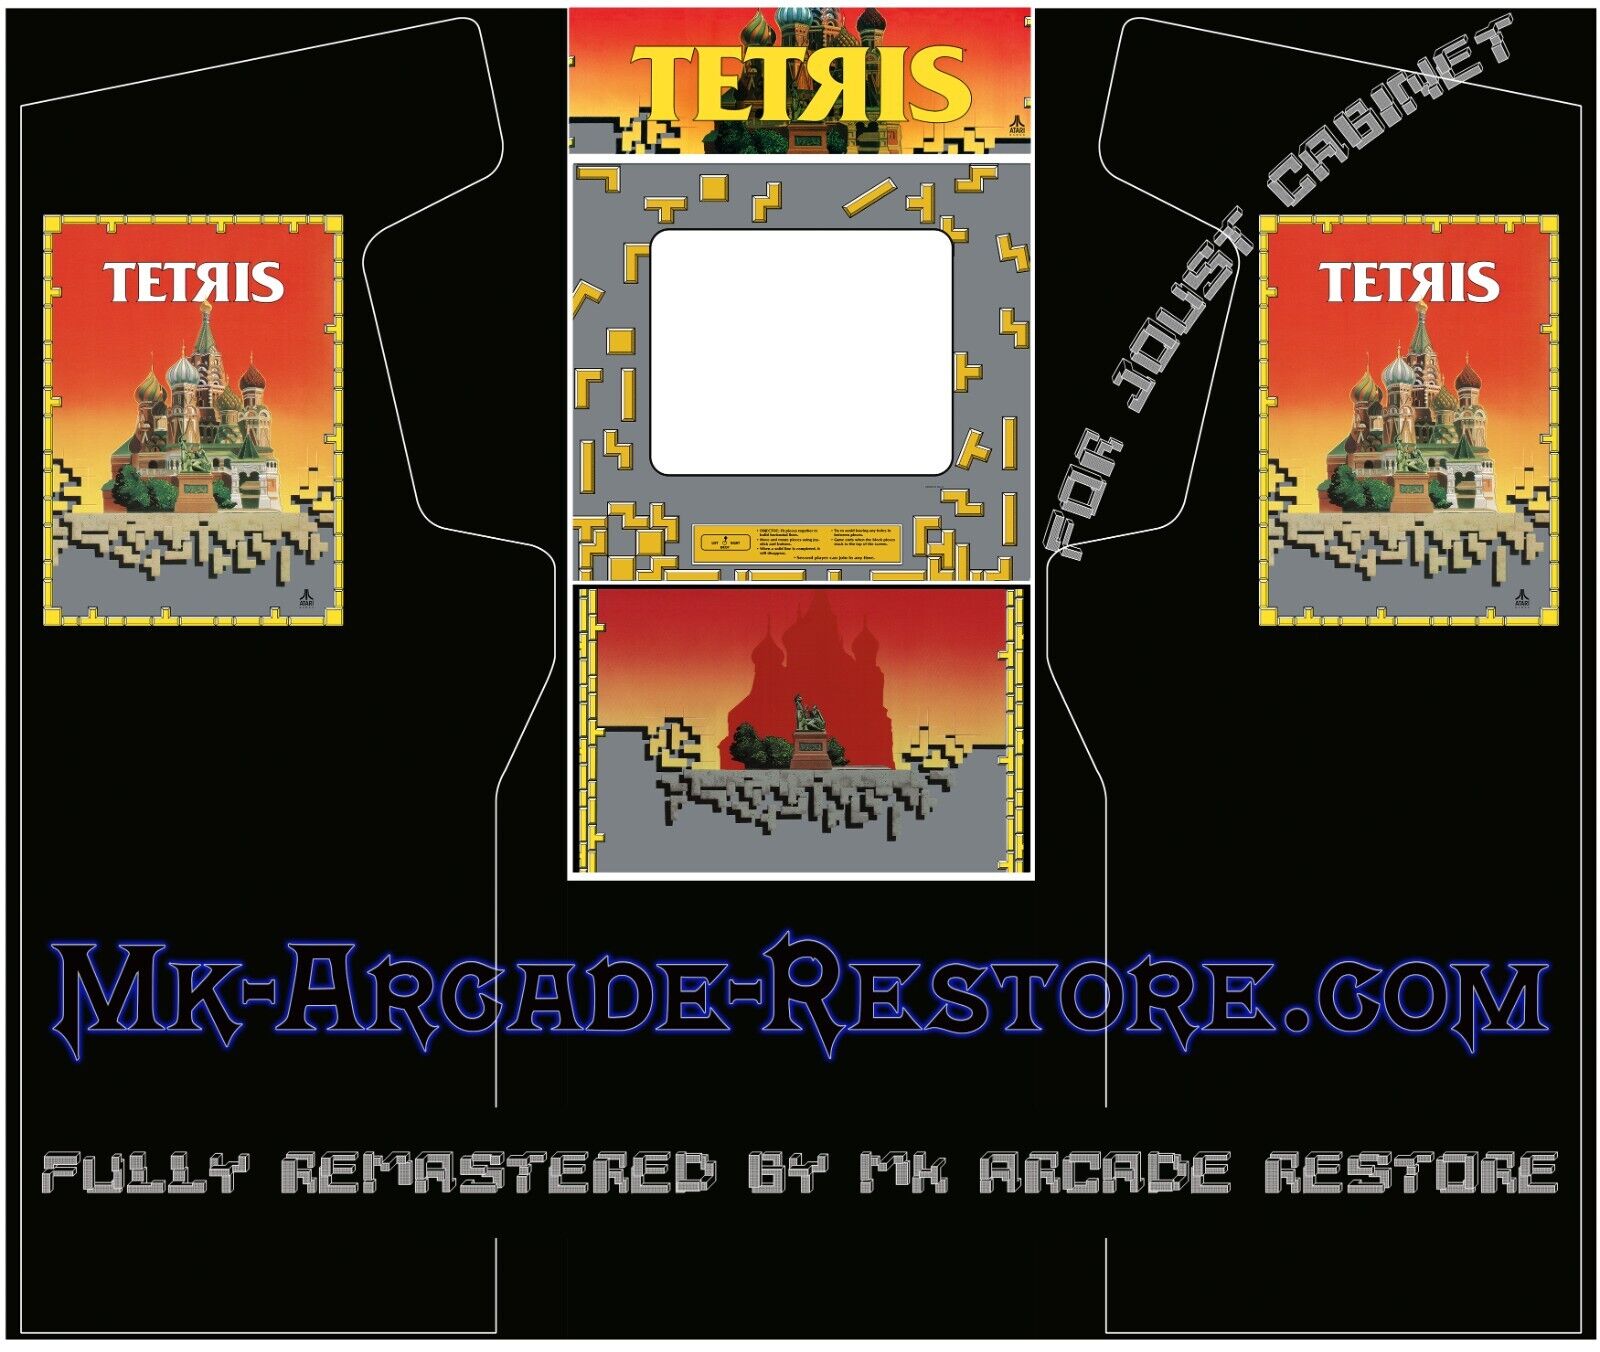 Tetris Side Art Arcade Cabinet Artwork Kit Graphics Decals Print